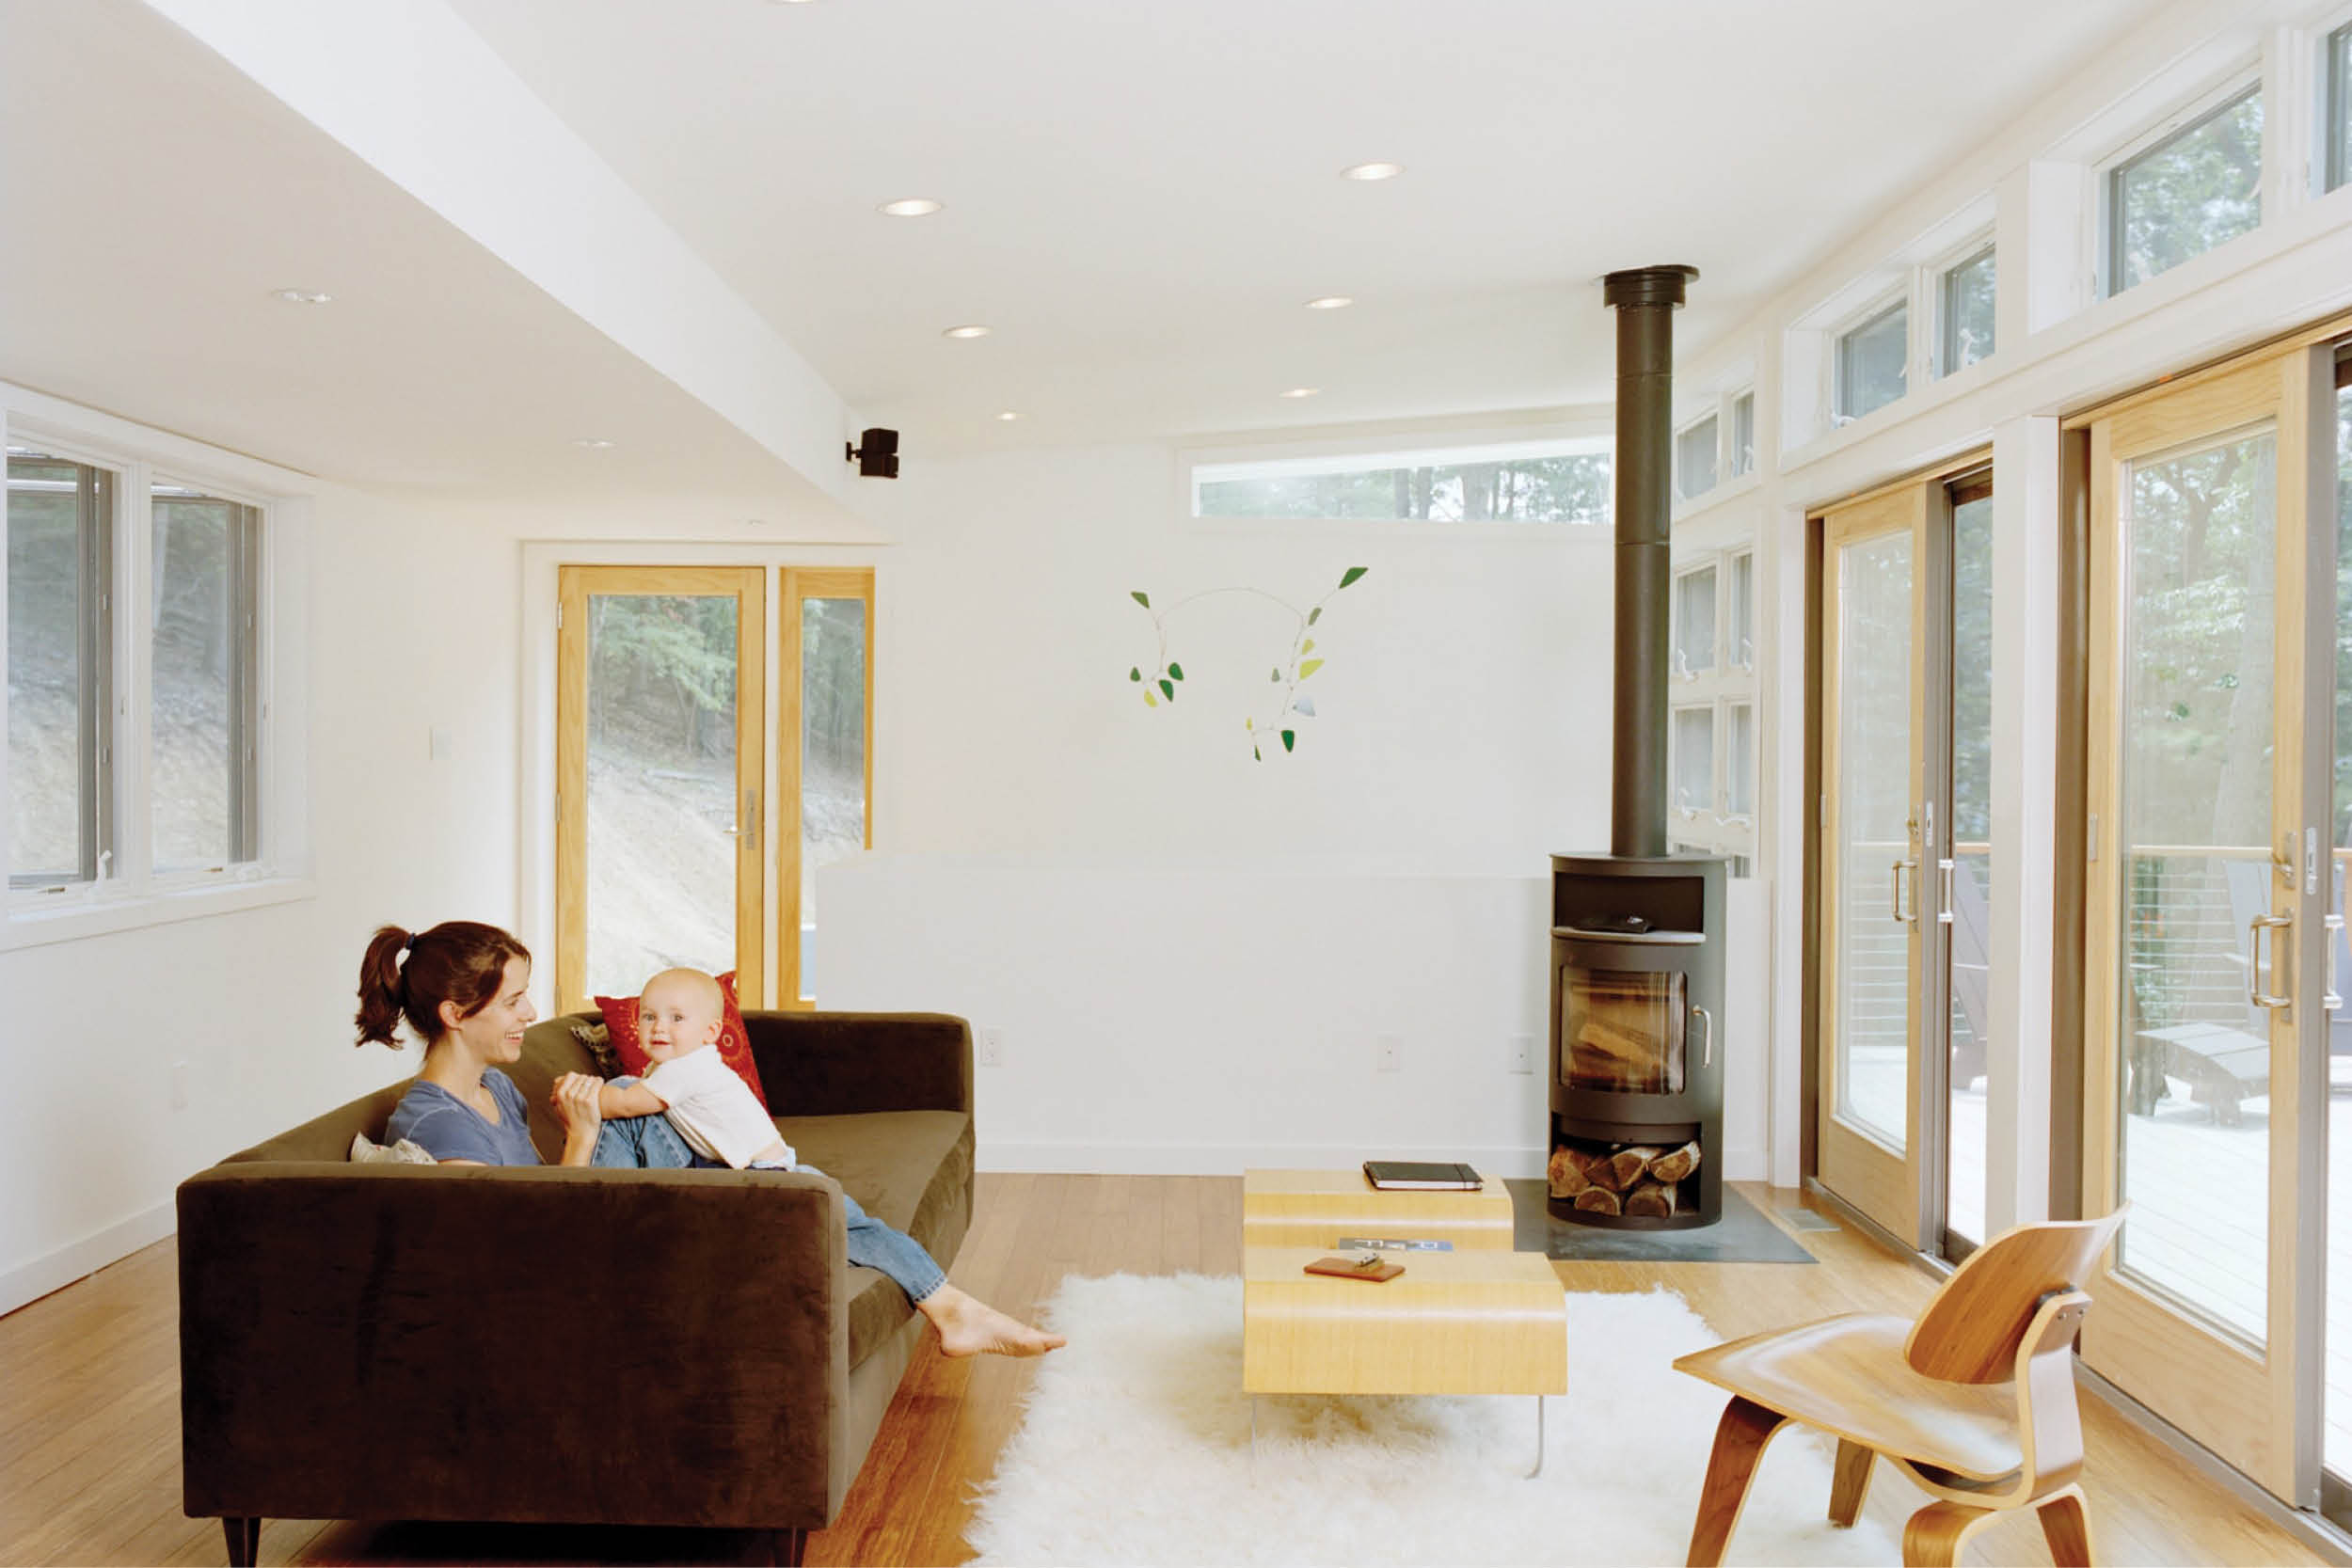 res4-resolution-4-architecture-modern-modular-home-prefab-house-brown-bar-interior-living-room-02.jpg